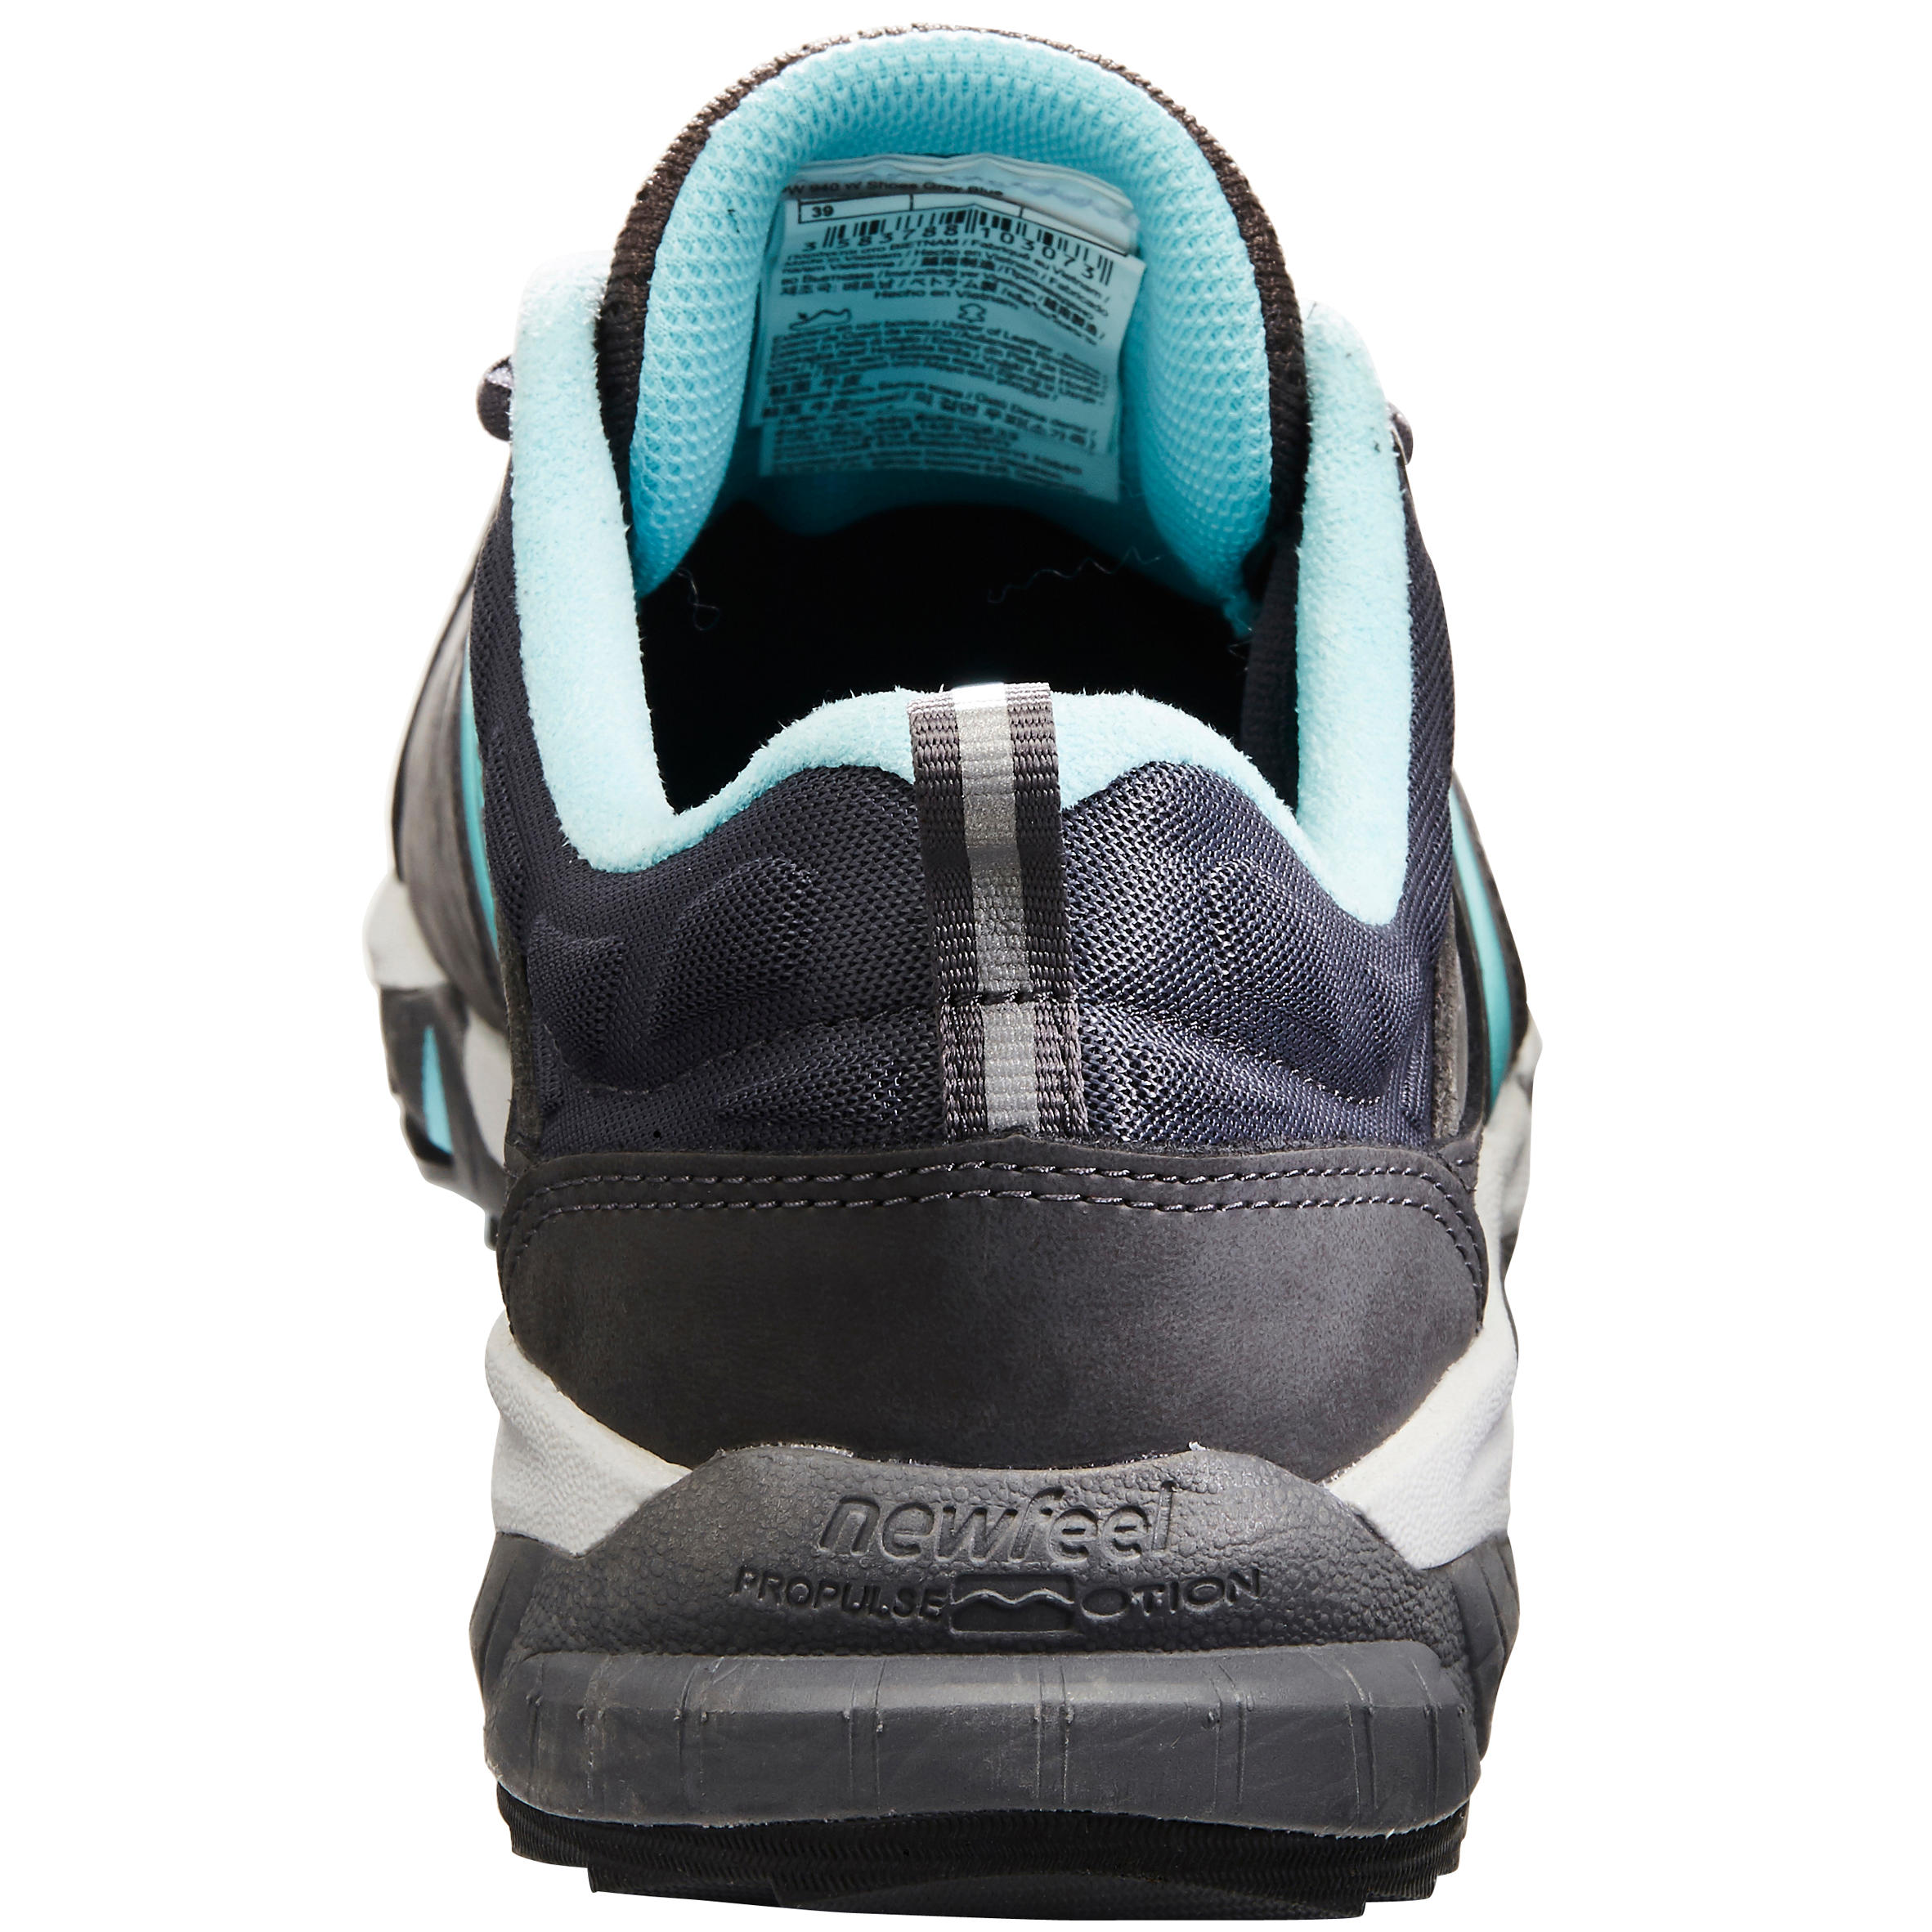 PW 940 Propulse Motion Women's Fitness Walking Shoes leather grey/blue 6/10